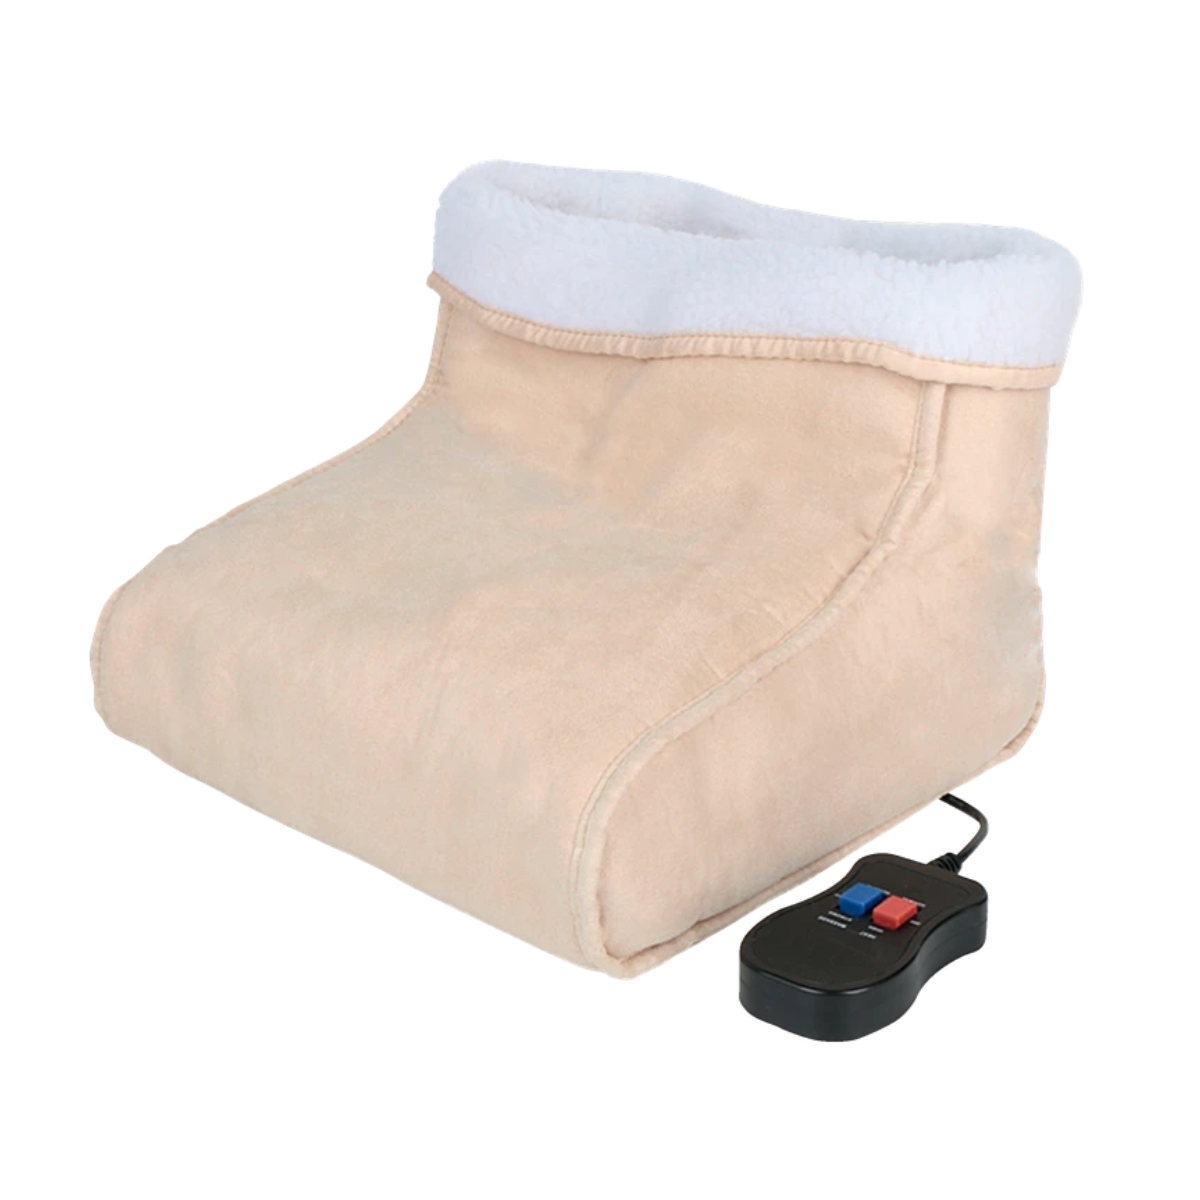 NORDIC Foot warmer & massager